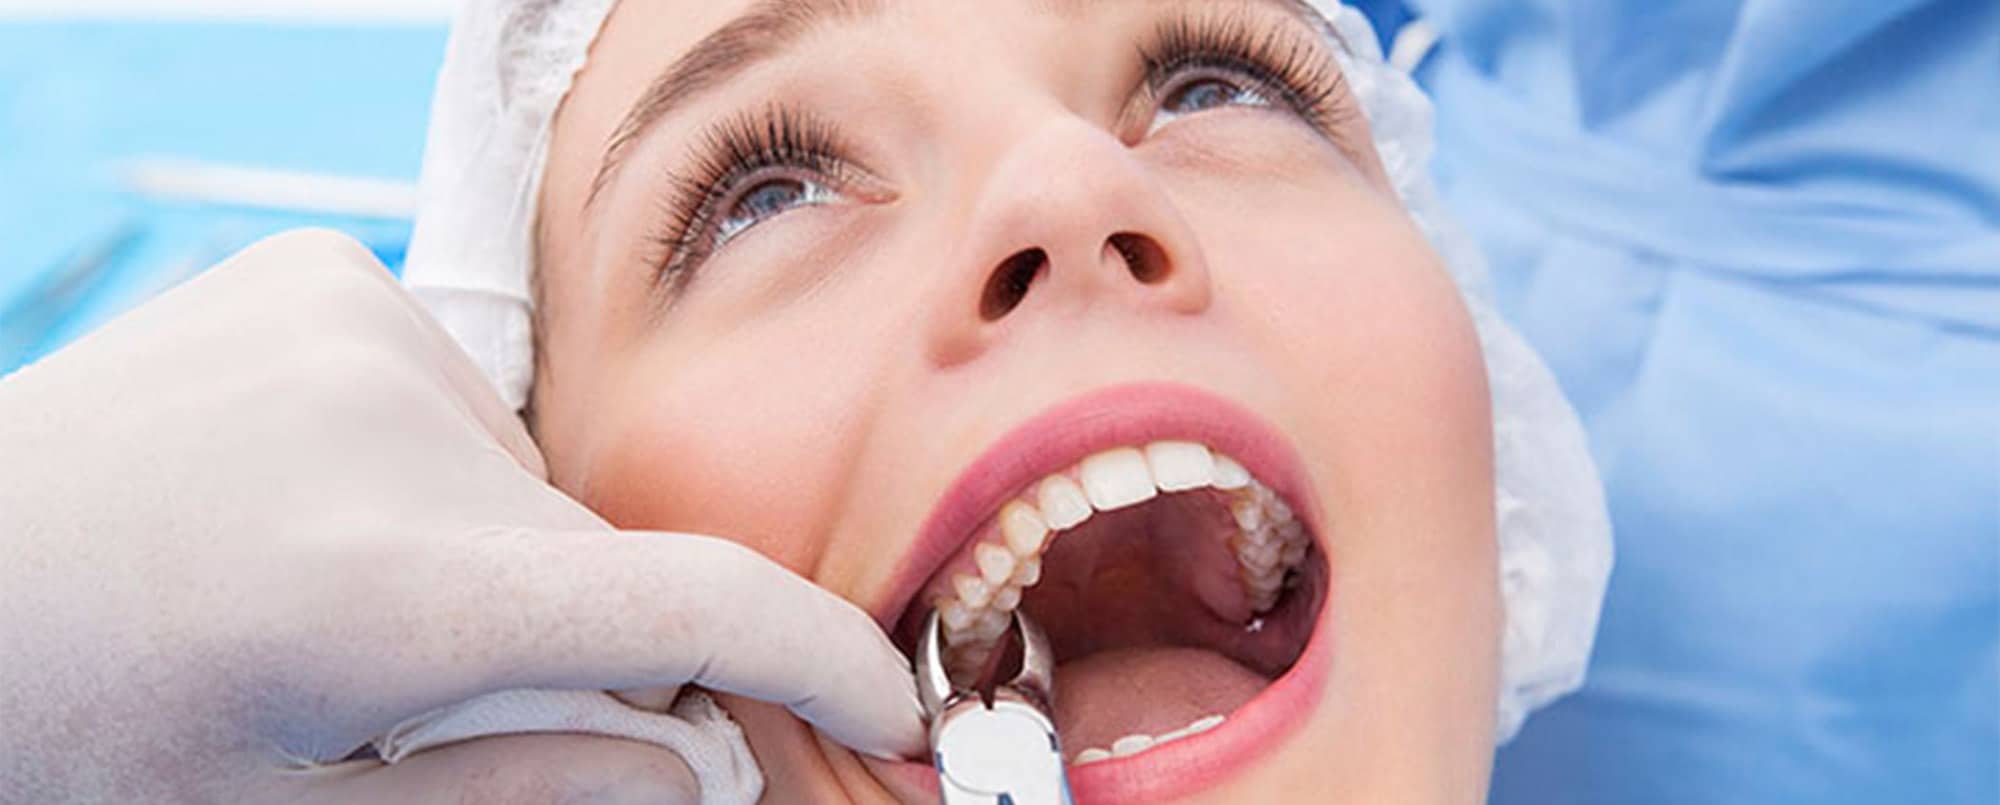 Interpretasi pencabutan gigi dalam mimpi